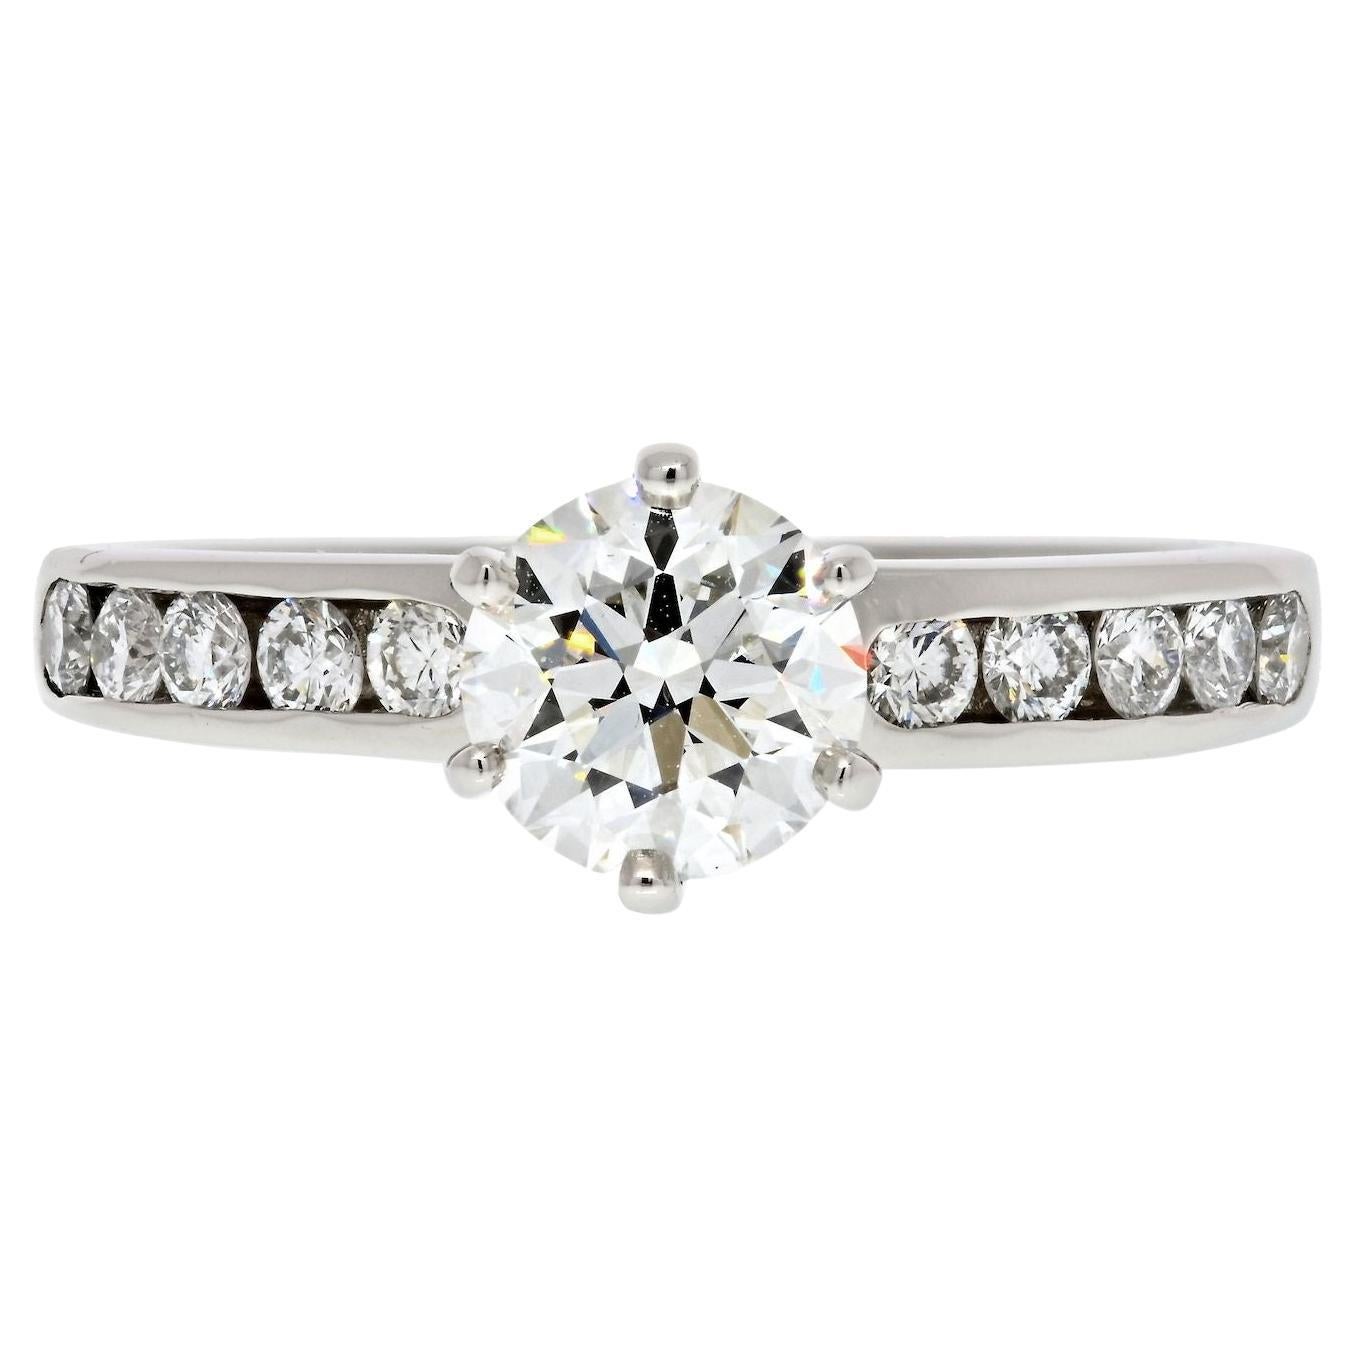 Tiffany & Co. 0.99ct Round Cut H VVS1 Six Prong Diamond Engagement Ring